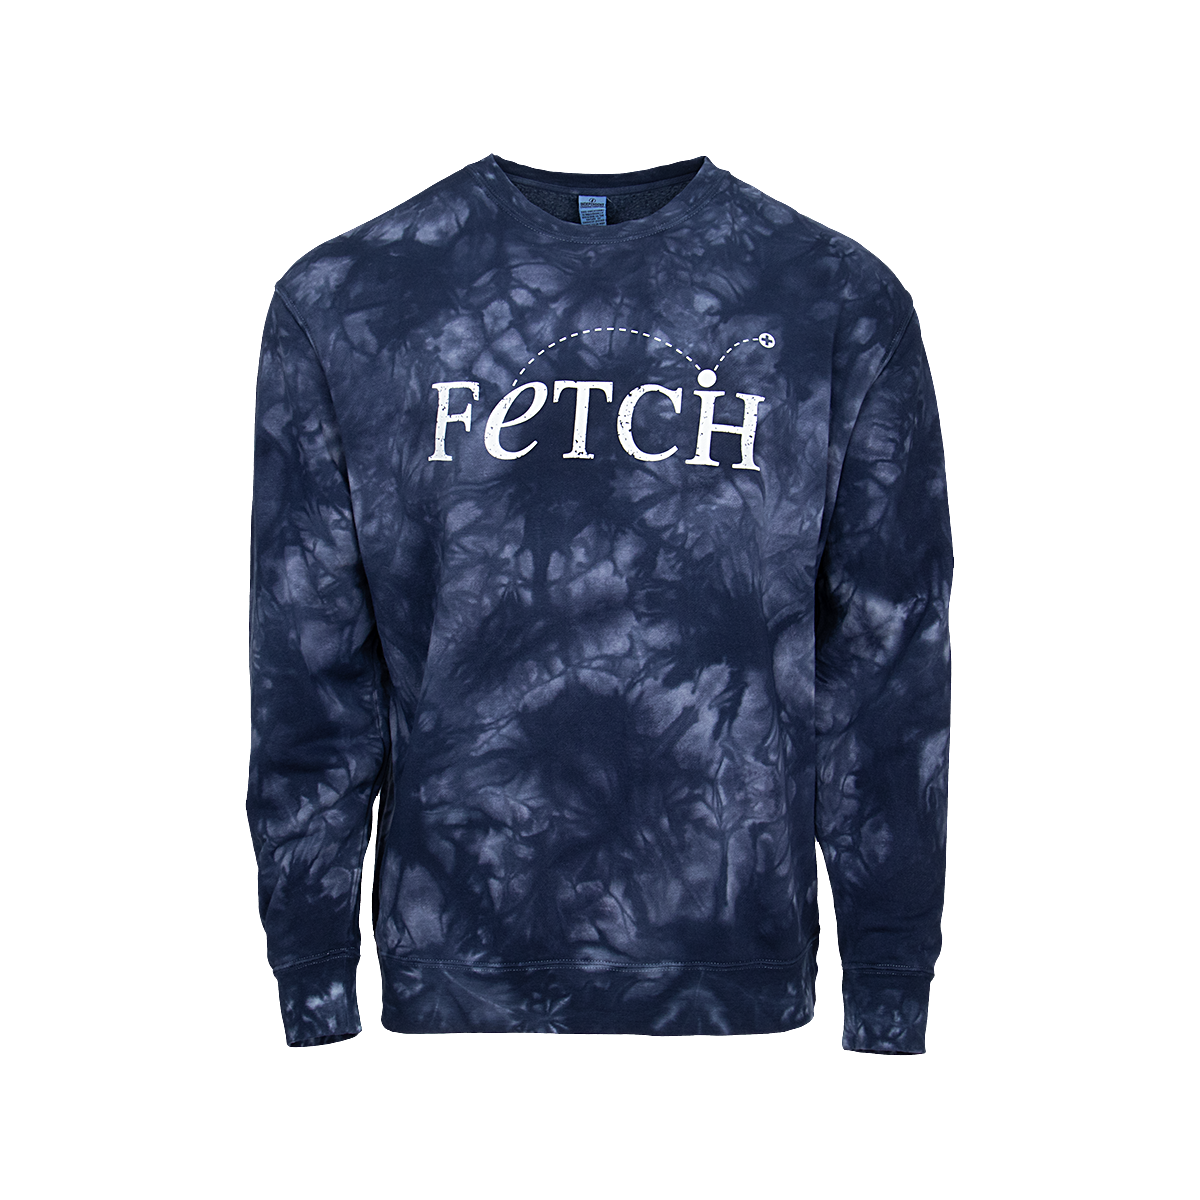 Fetch Tie-Dye Crewneck Unisex Sweatshirt